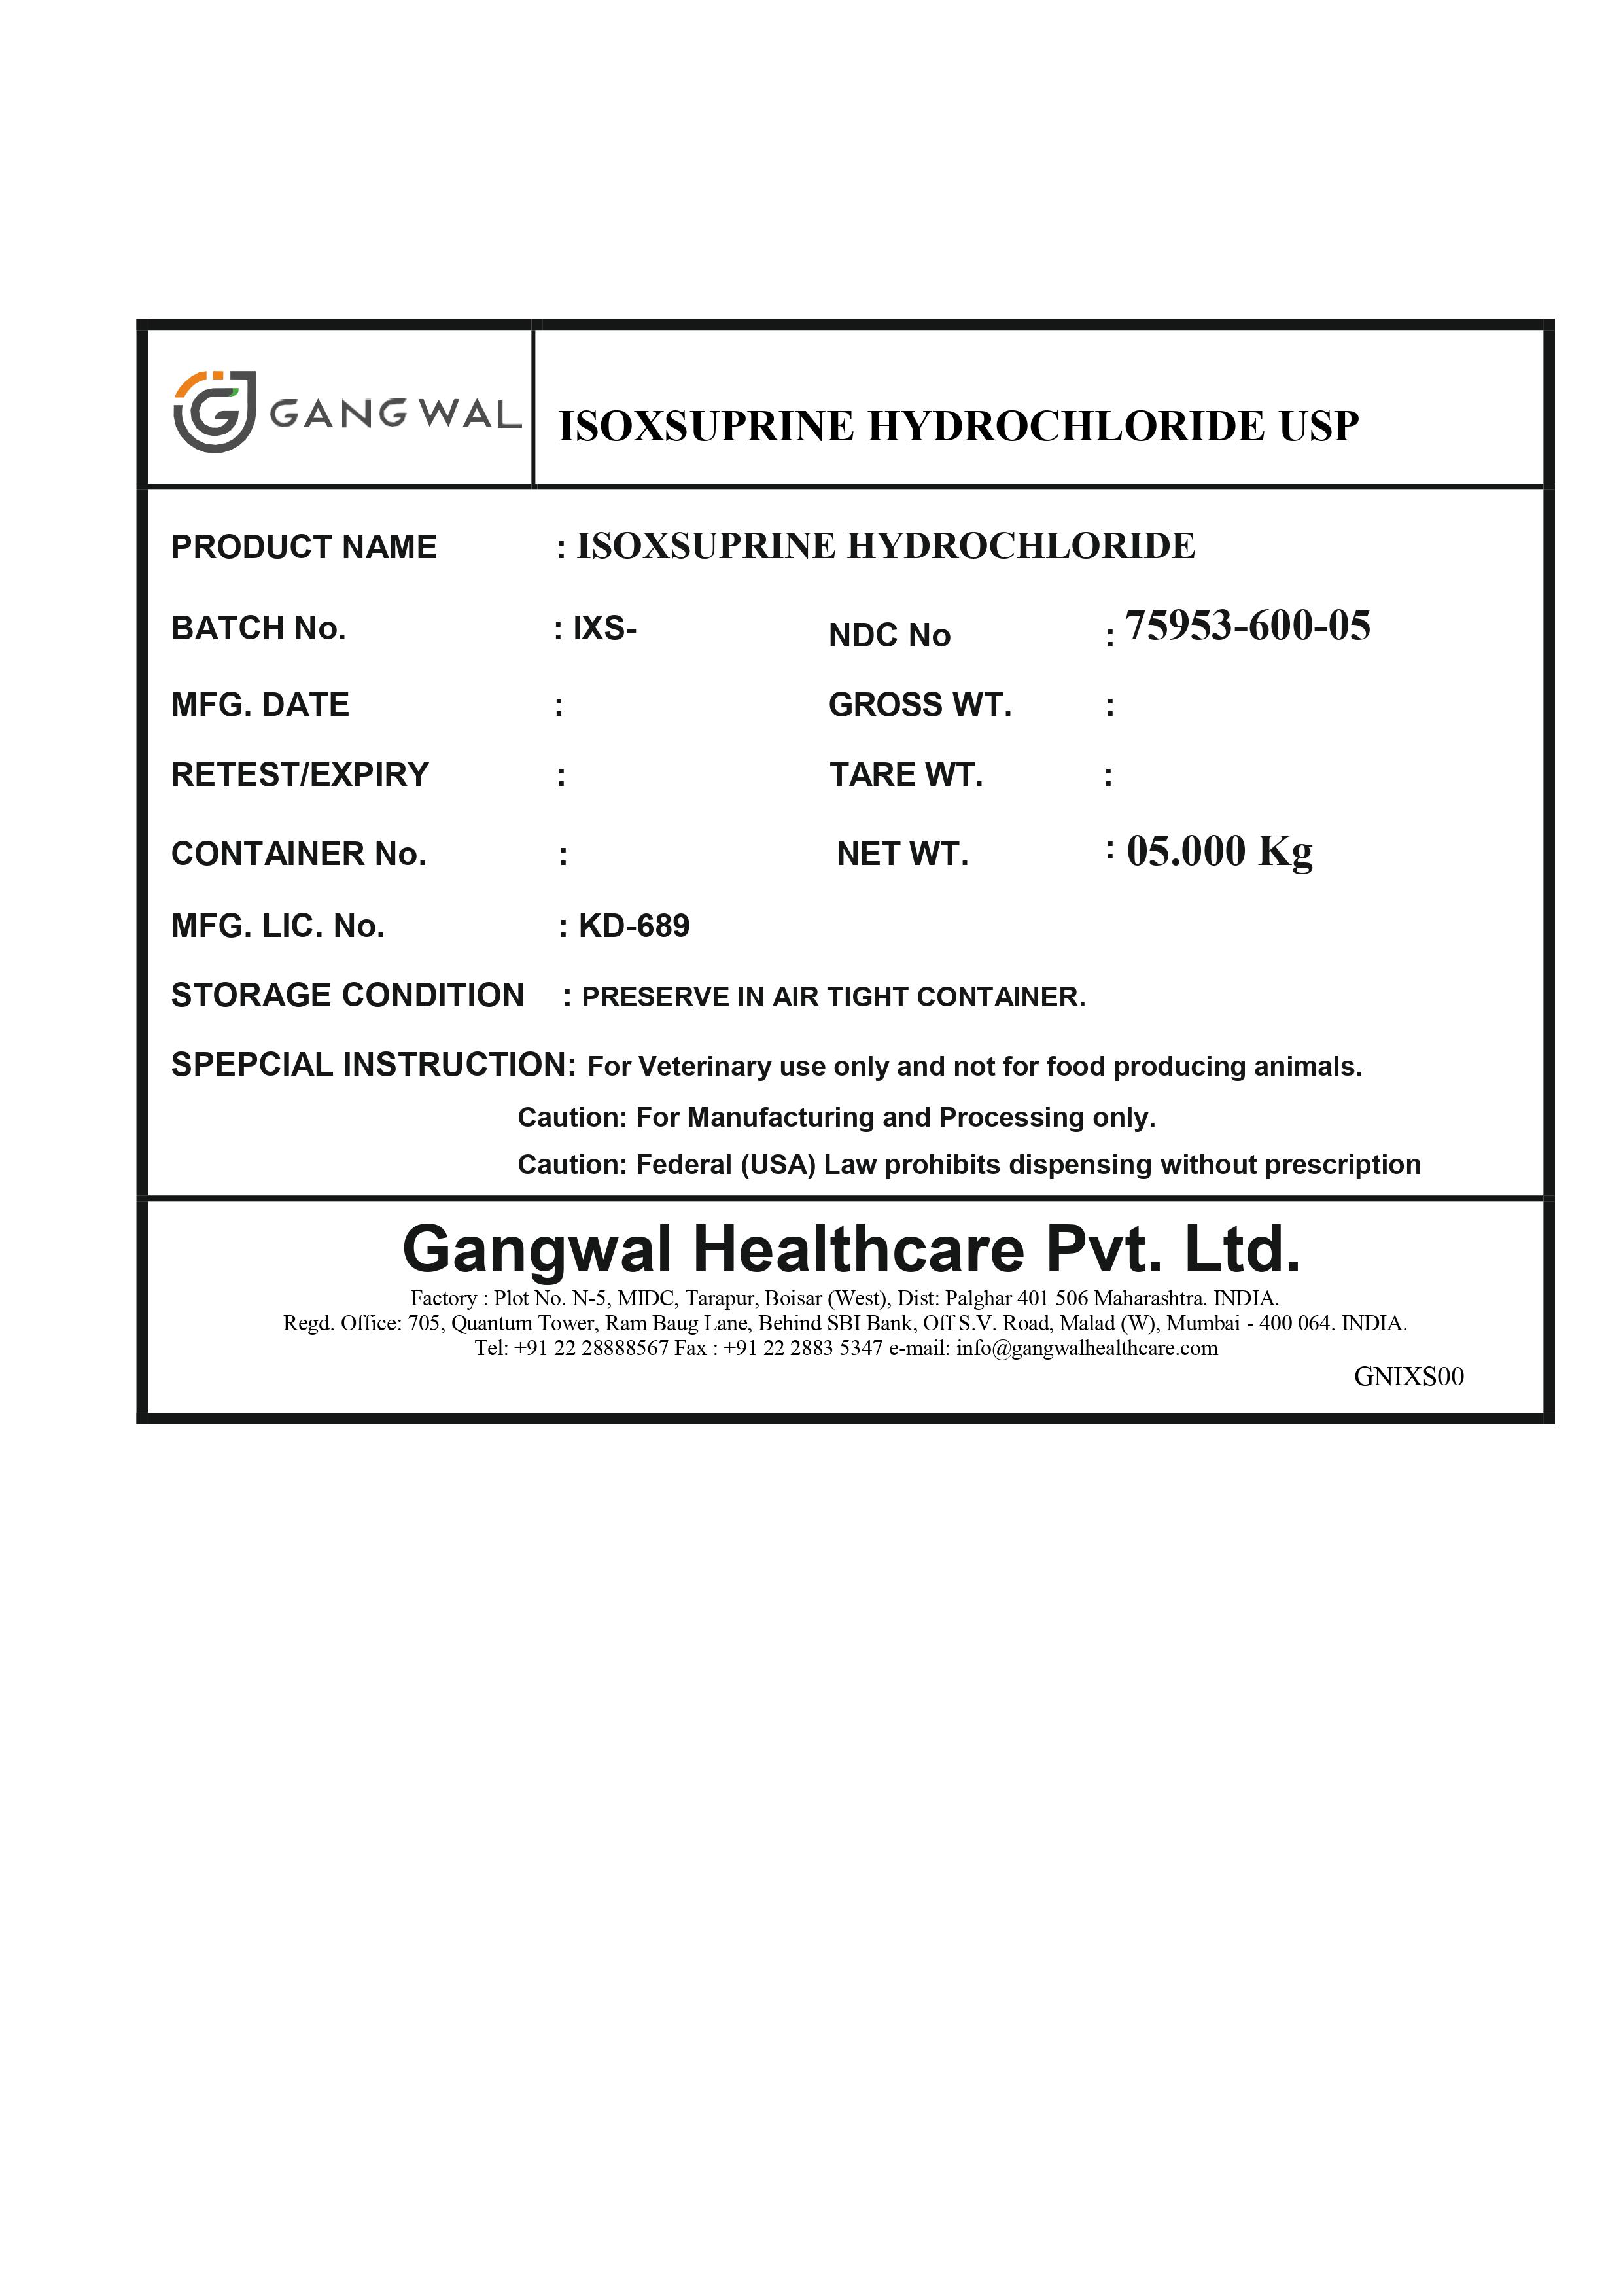 Isoxsuprine Hydrochloride USP - 5 Kg